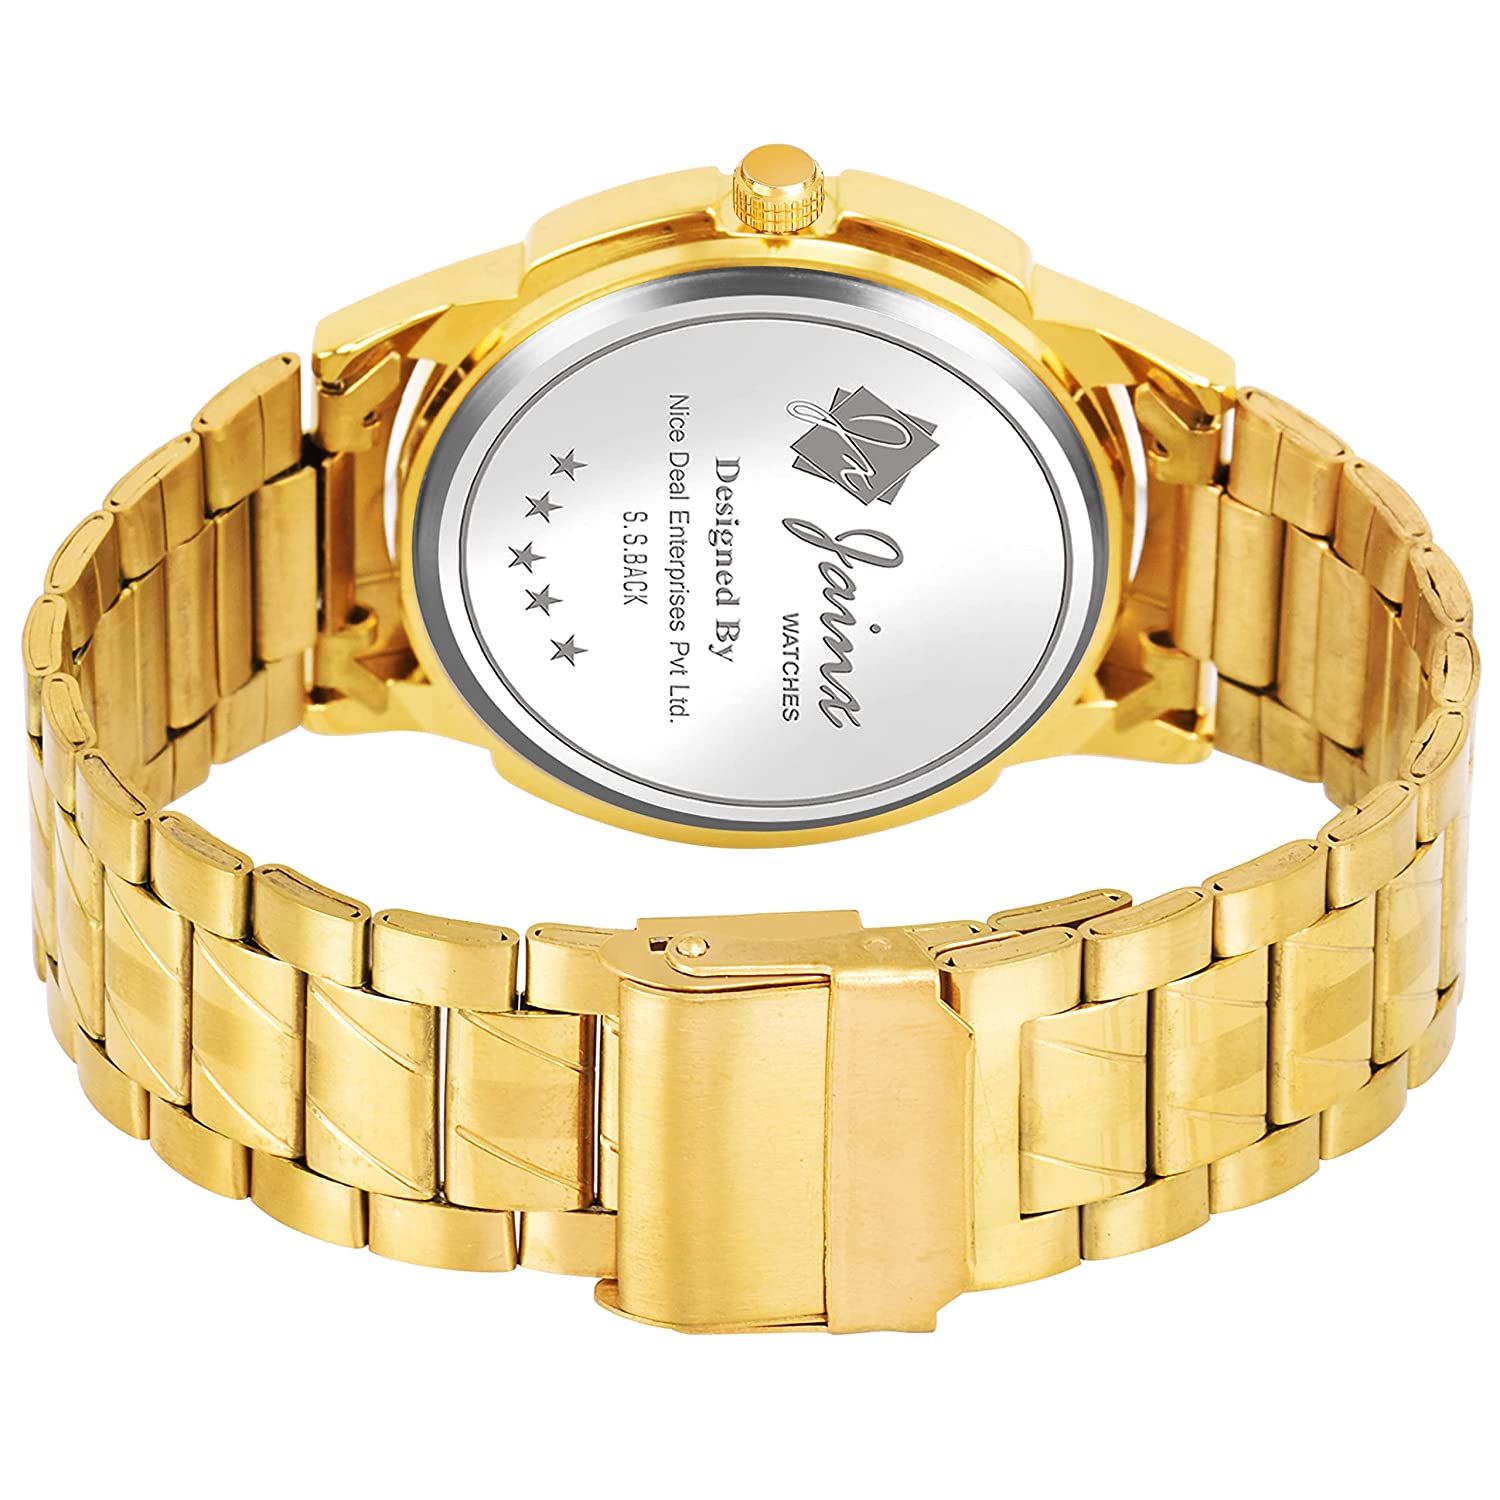 Premium Day and Date Function Golden Chain Analog Watch - For Men JM1166 - Jainx Store